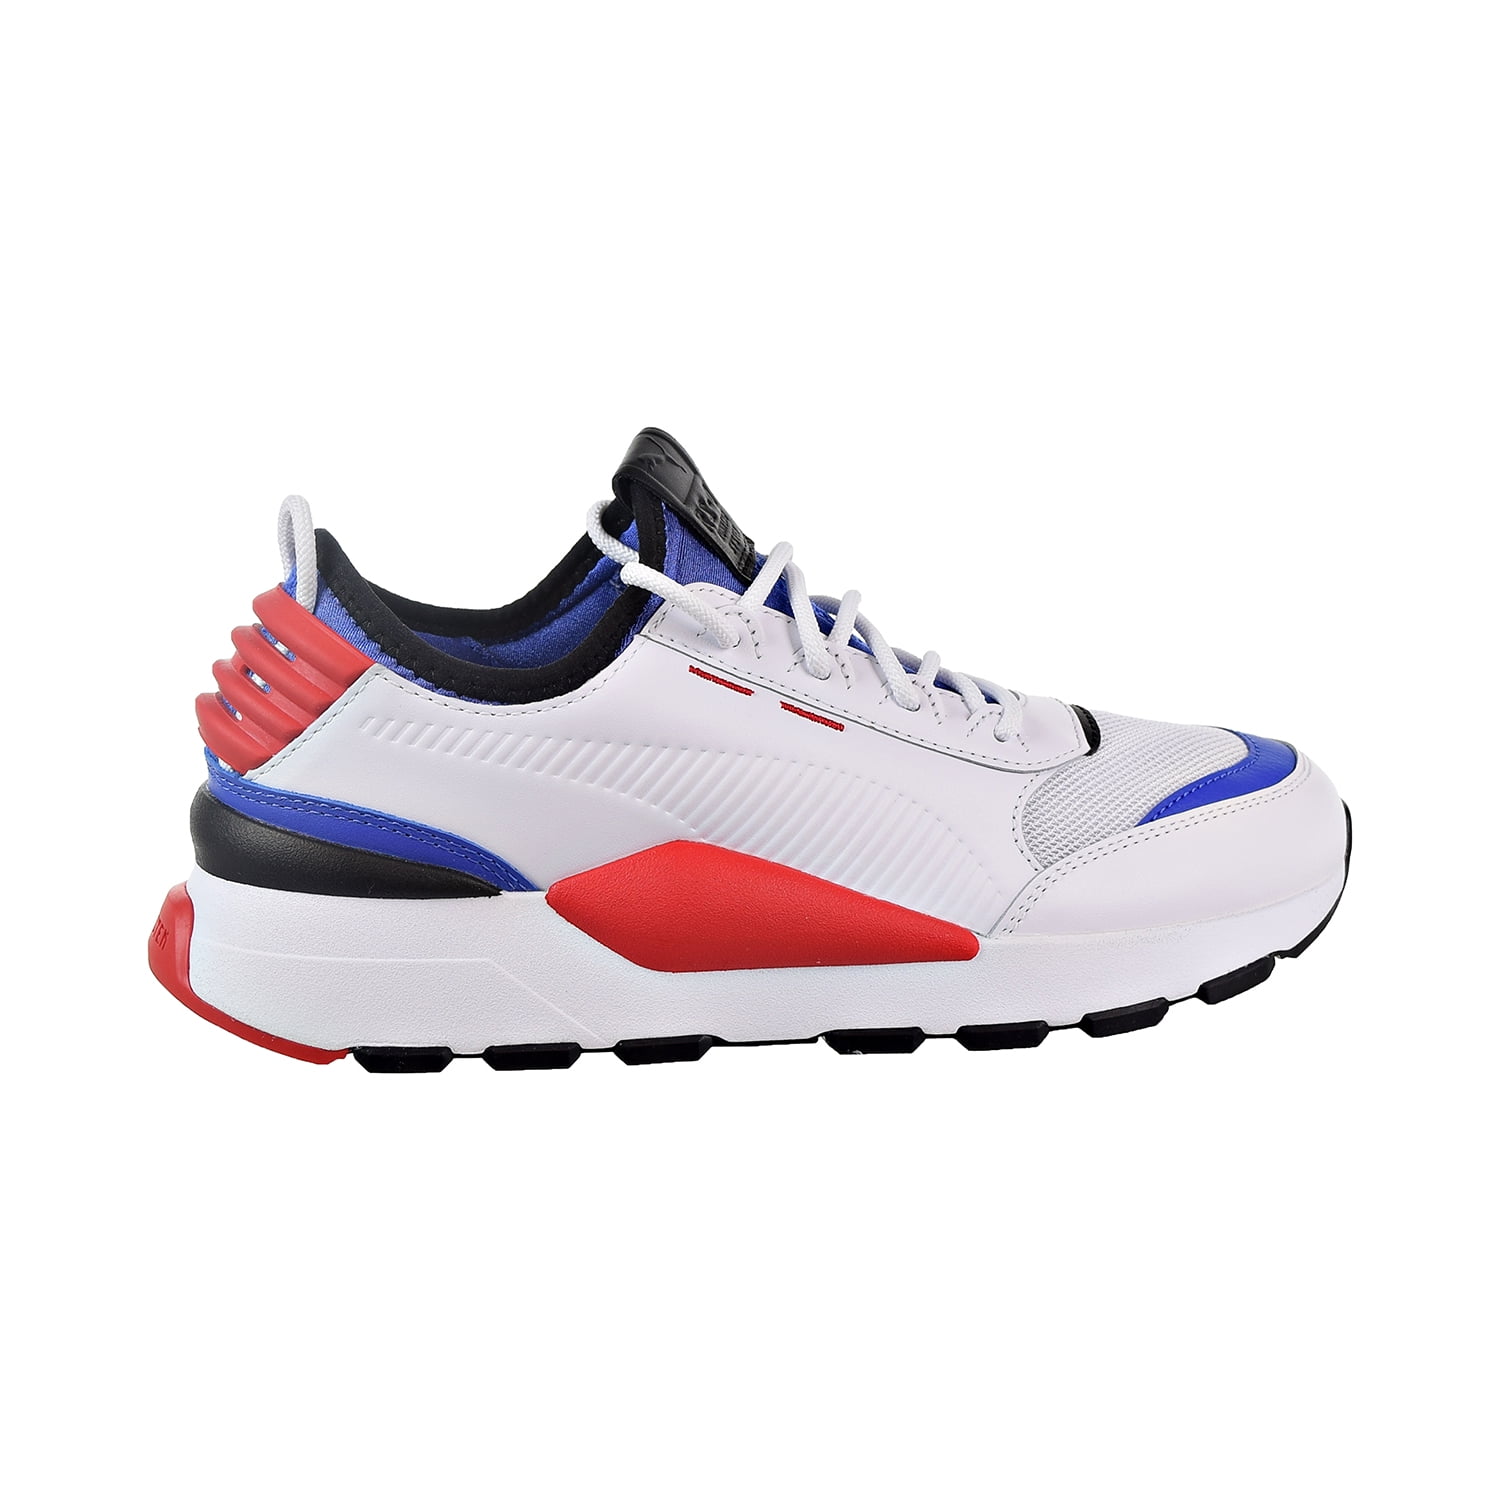 Vadear enfermedad Propuesta Puma RS-0 Sound Men's Shoes White/Dazz Blue/High Risk Red 366890-01 -  Walmart.com